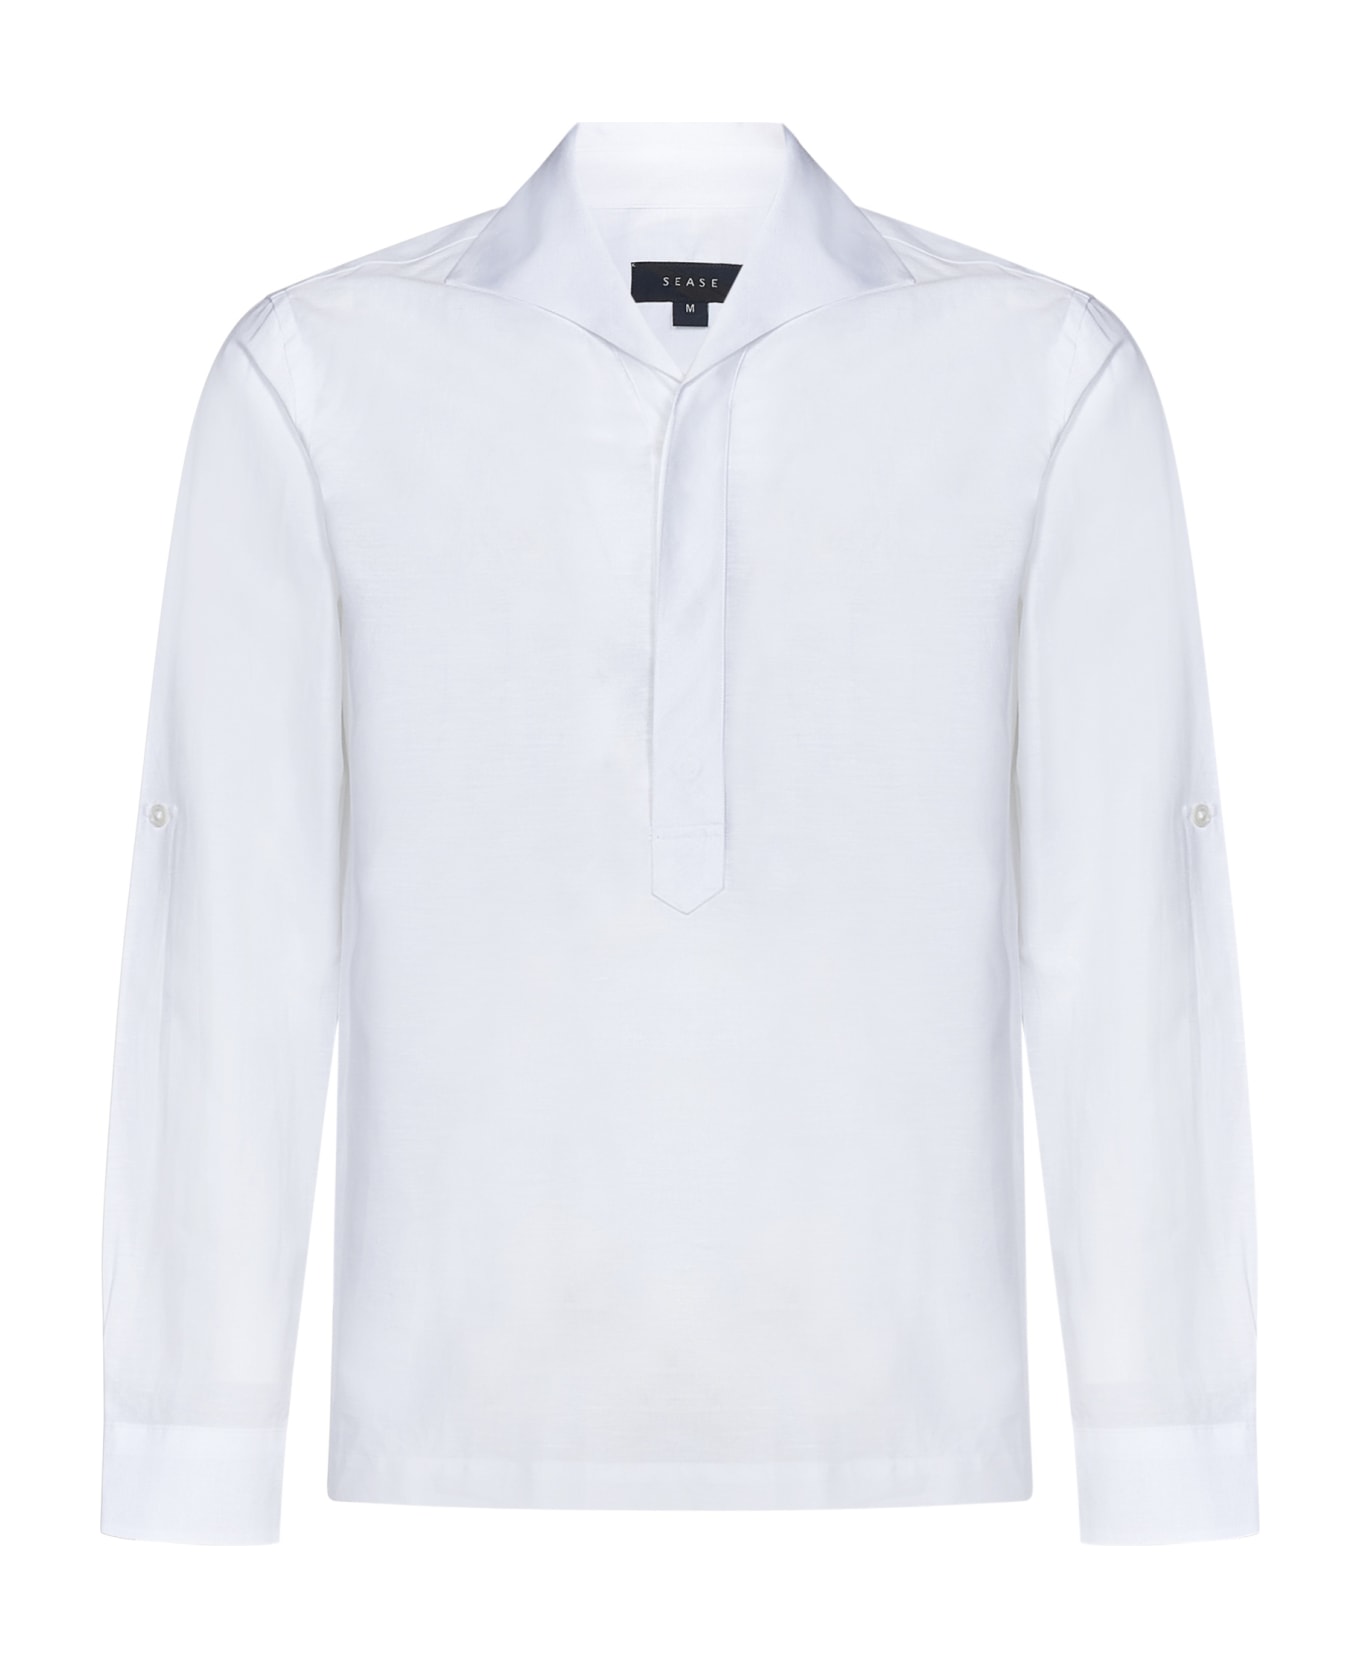 Sease Half Button Shirt - White